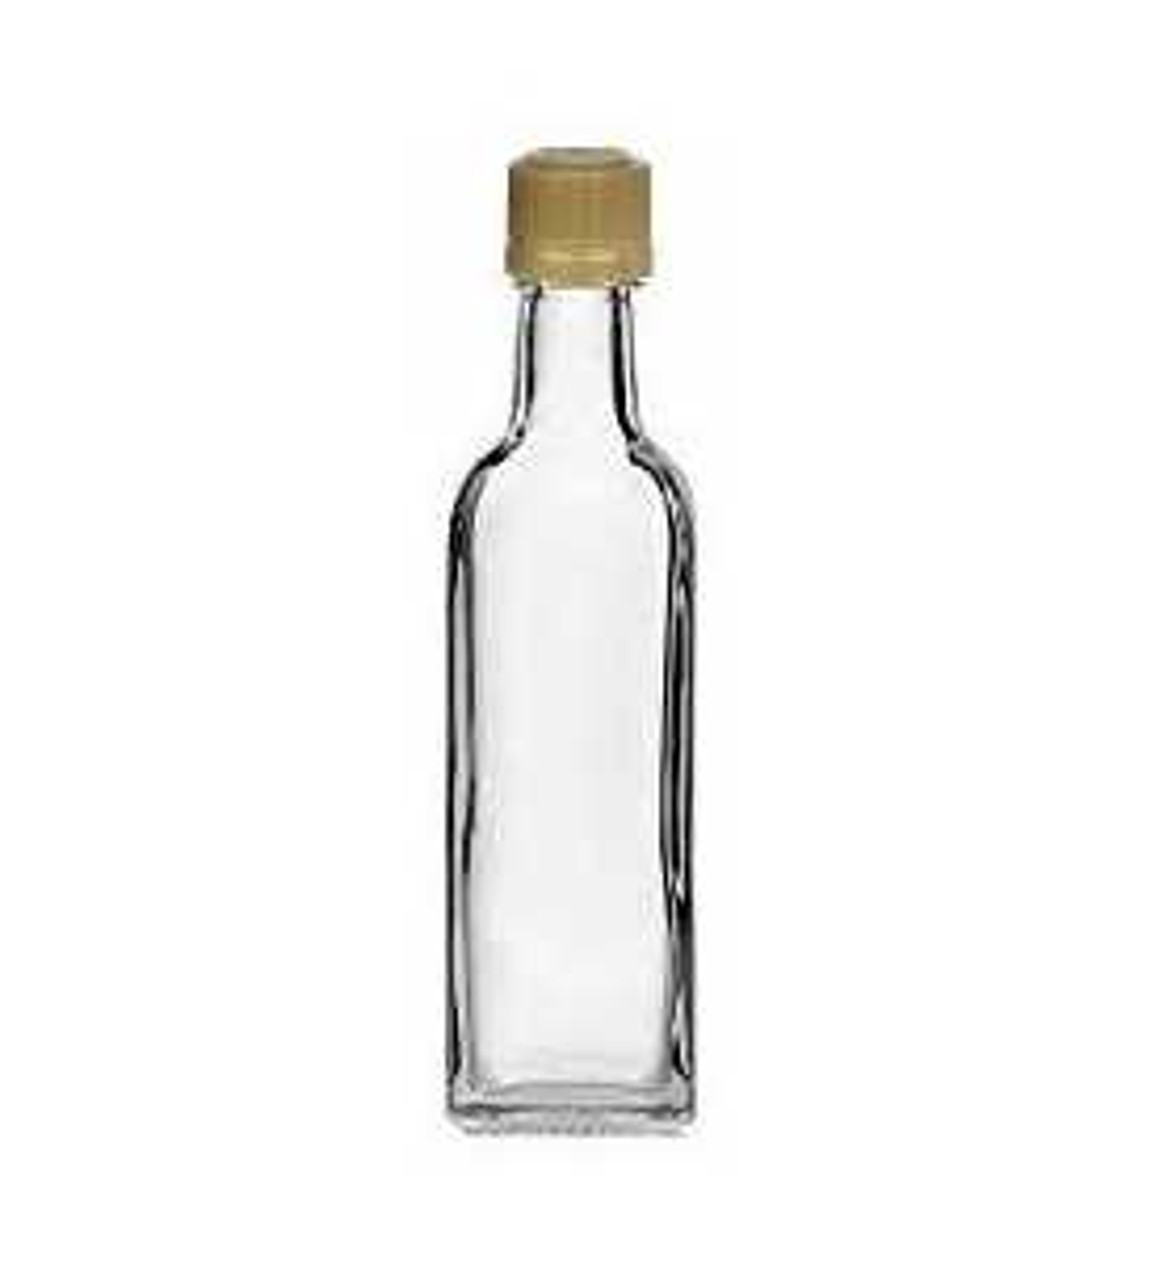 200 ml Clear Glass Flask Bottles w/ Black Ribbed Tamper Evident Caps